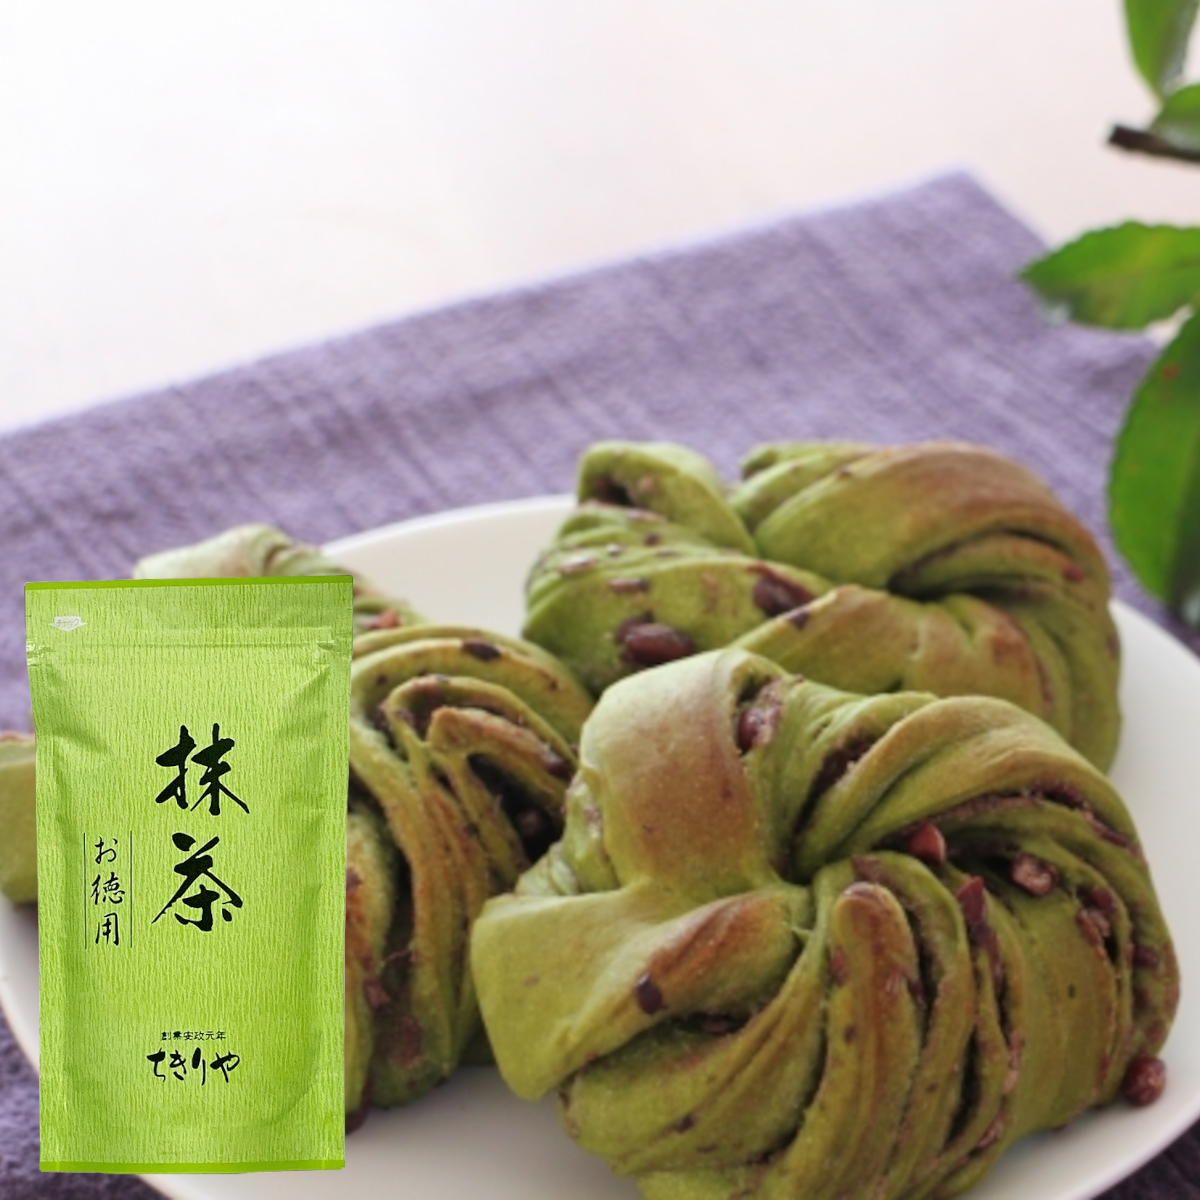 Uji Matcha for cooking - 150g green tea powder